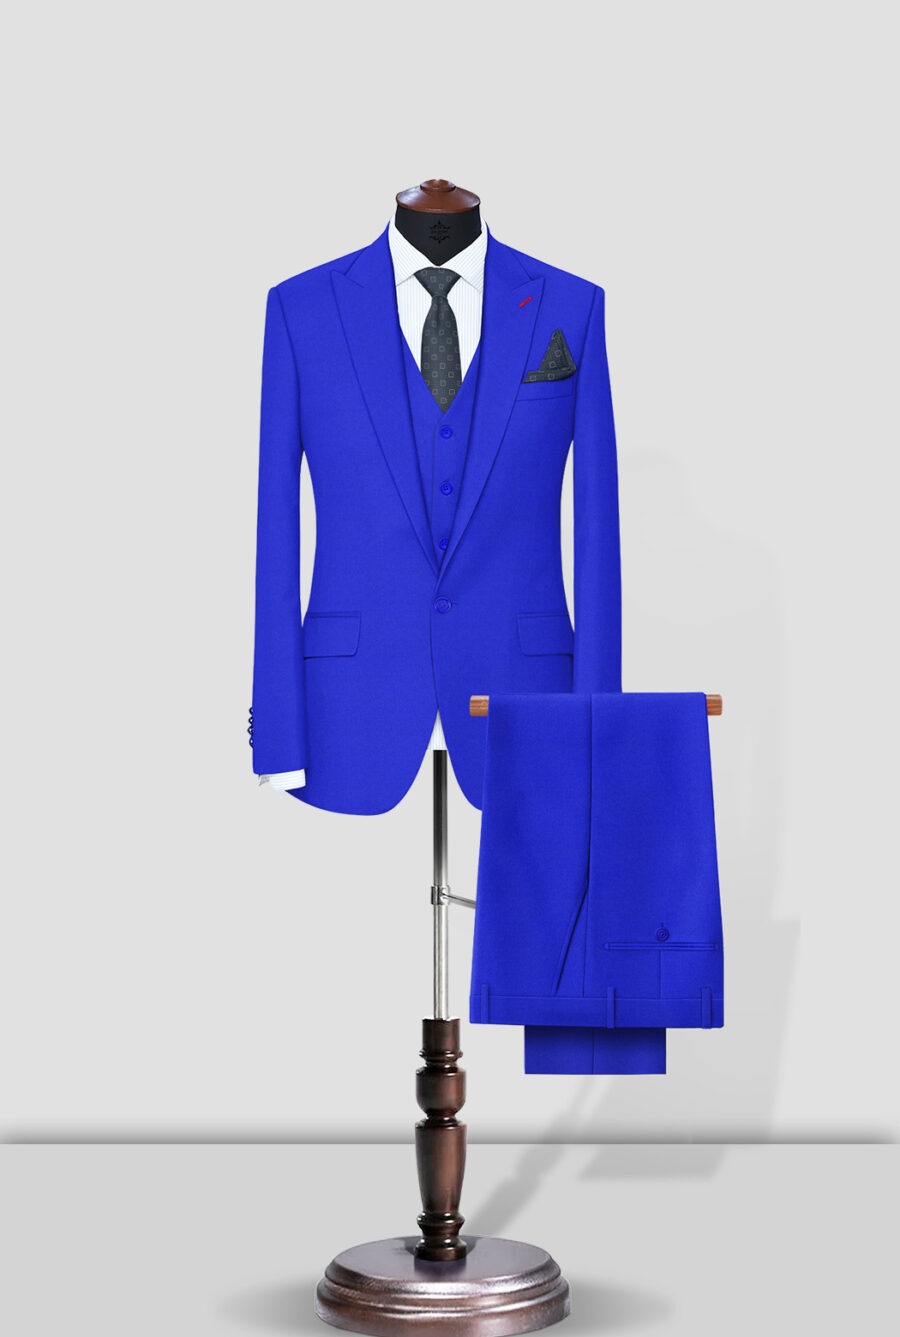 Custom Royal Blue Tuxedo Suit For Groom And Wedding Mens Latest Royal Blue  Coat Pant Designs Skinny Set Terno Jack218C From Ai789, $73.31 | DHgate.Com